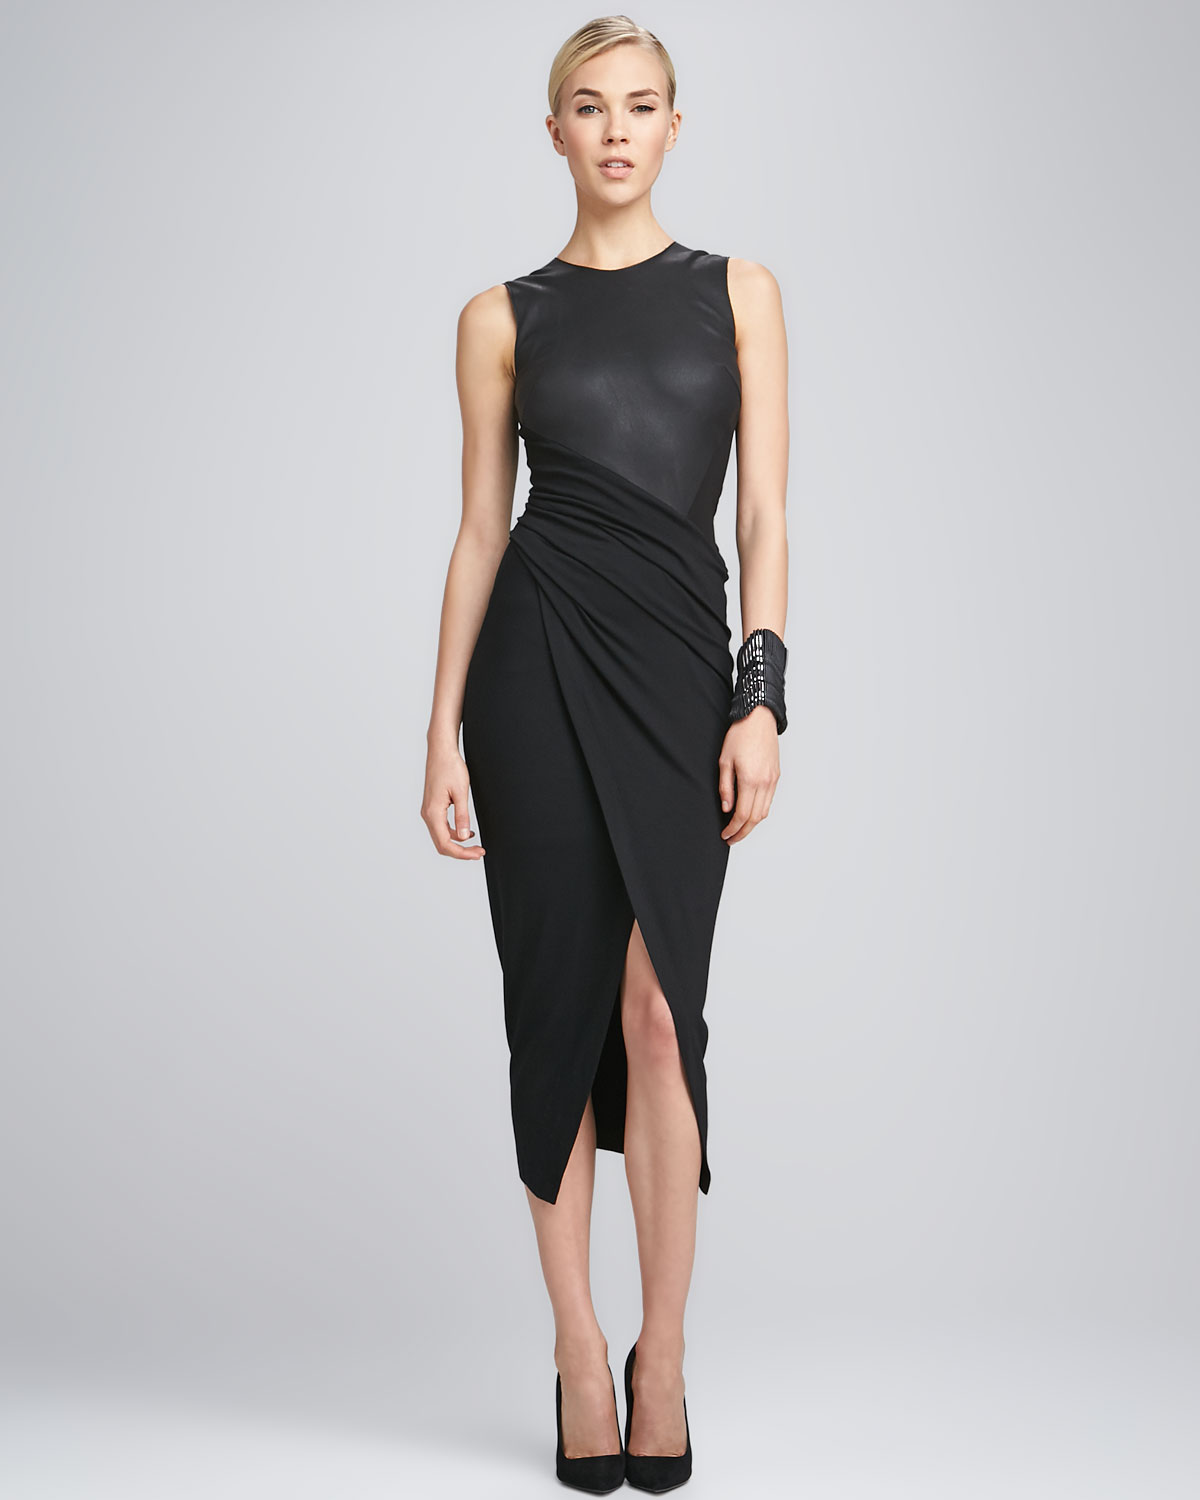 Lyst - Donna karan Sleeveless Leather Draped Jersey Dress in Black